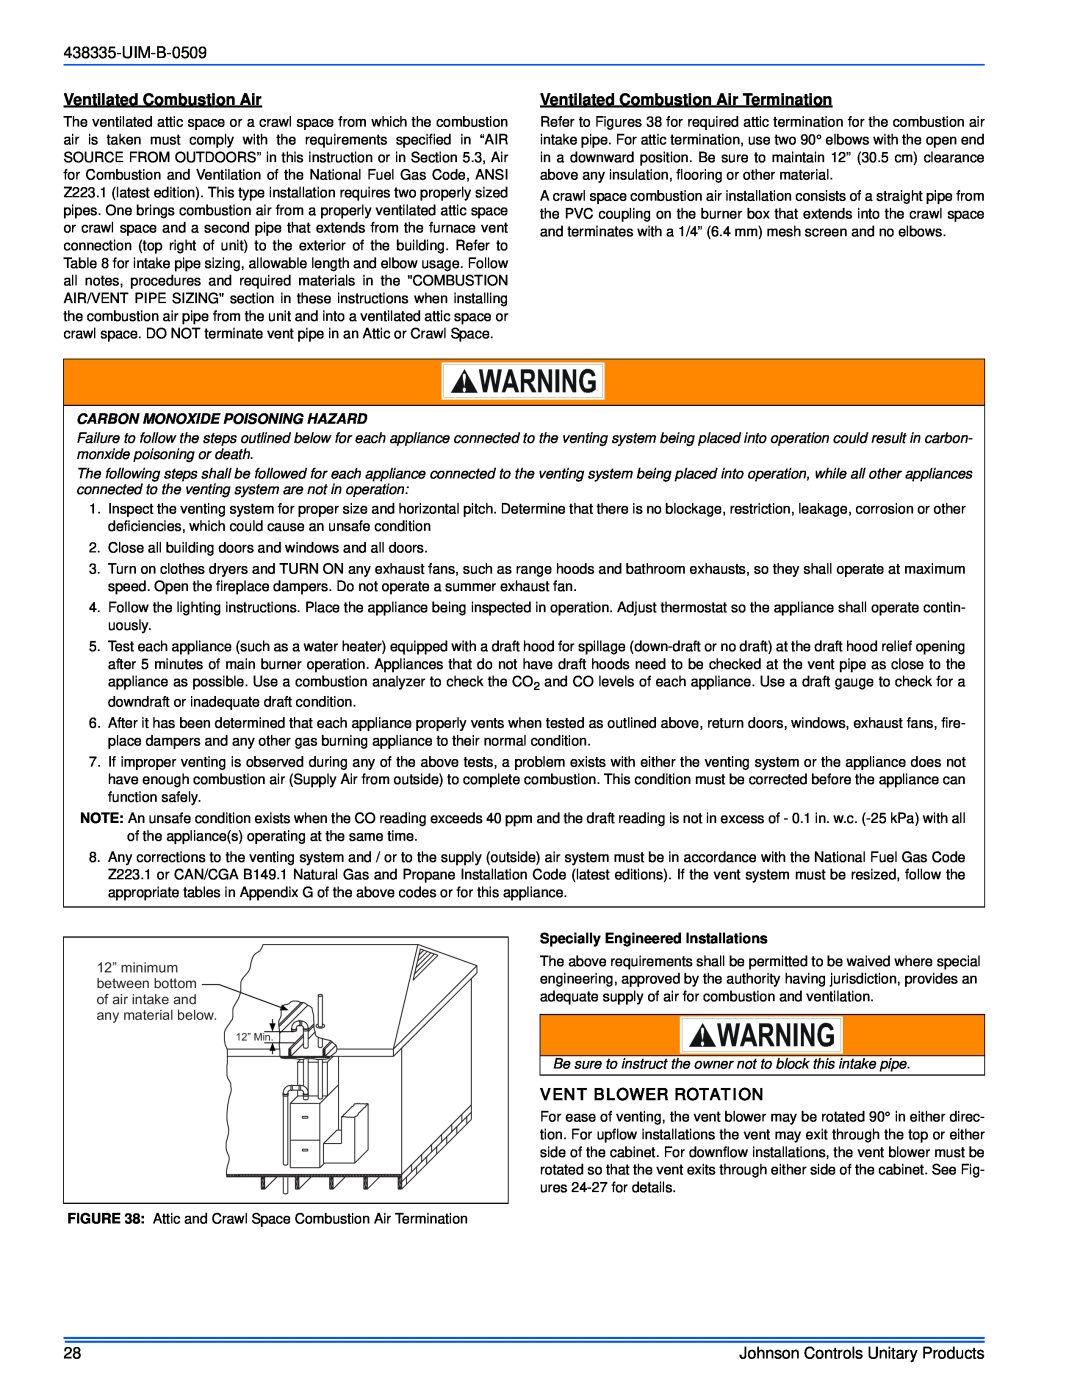 Johnson Controls TM9V MP installation manual UIM-B-0509, Ventilated Combustion Air Termination, Vent Blower Rotation 